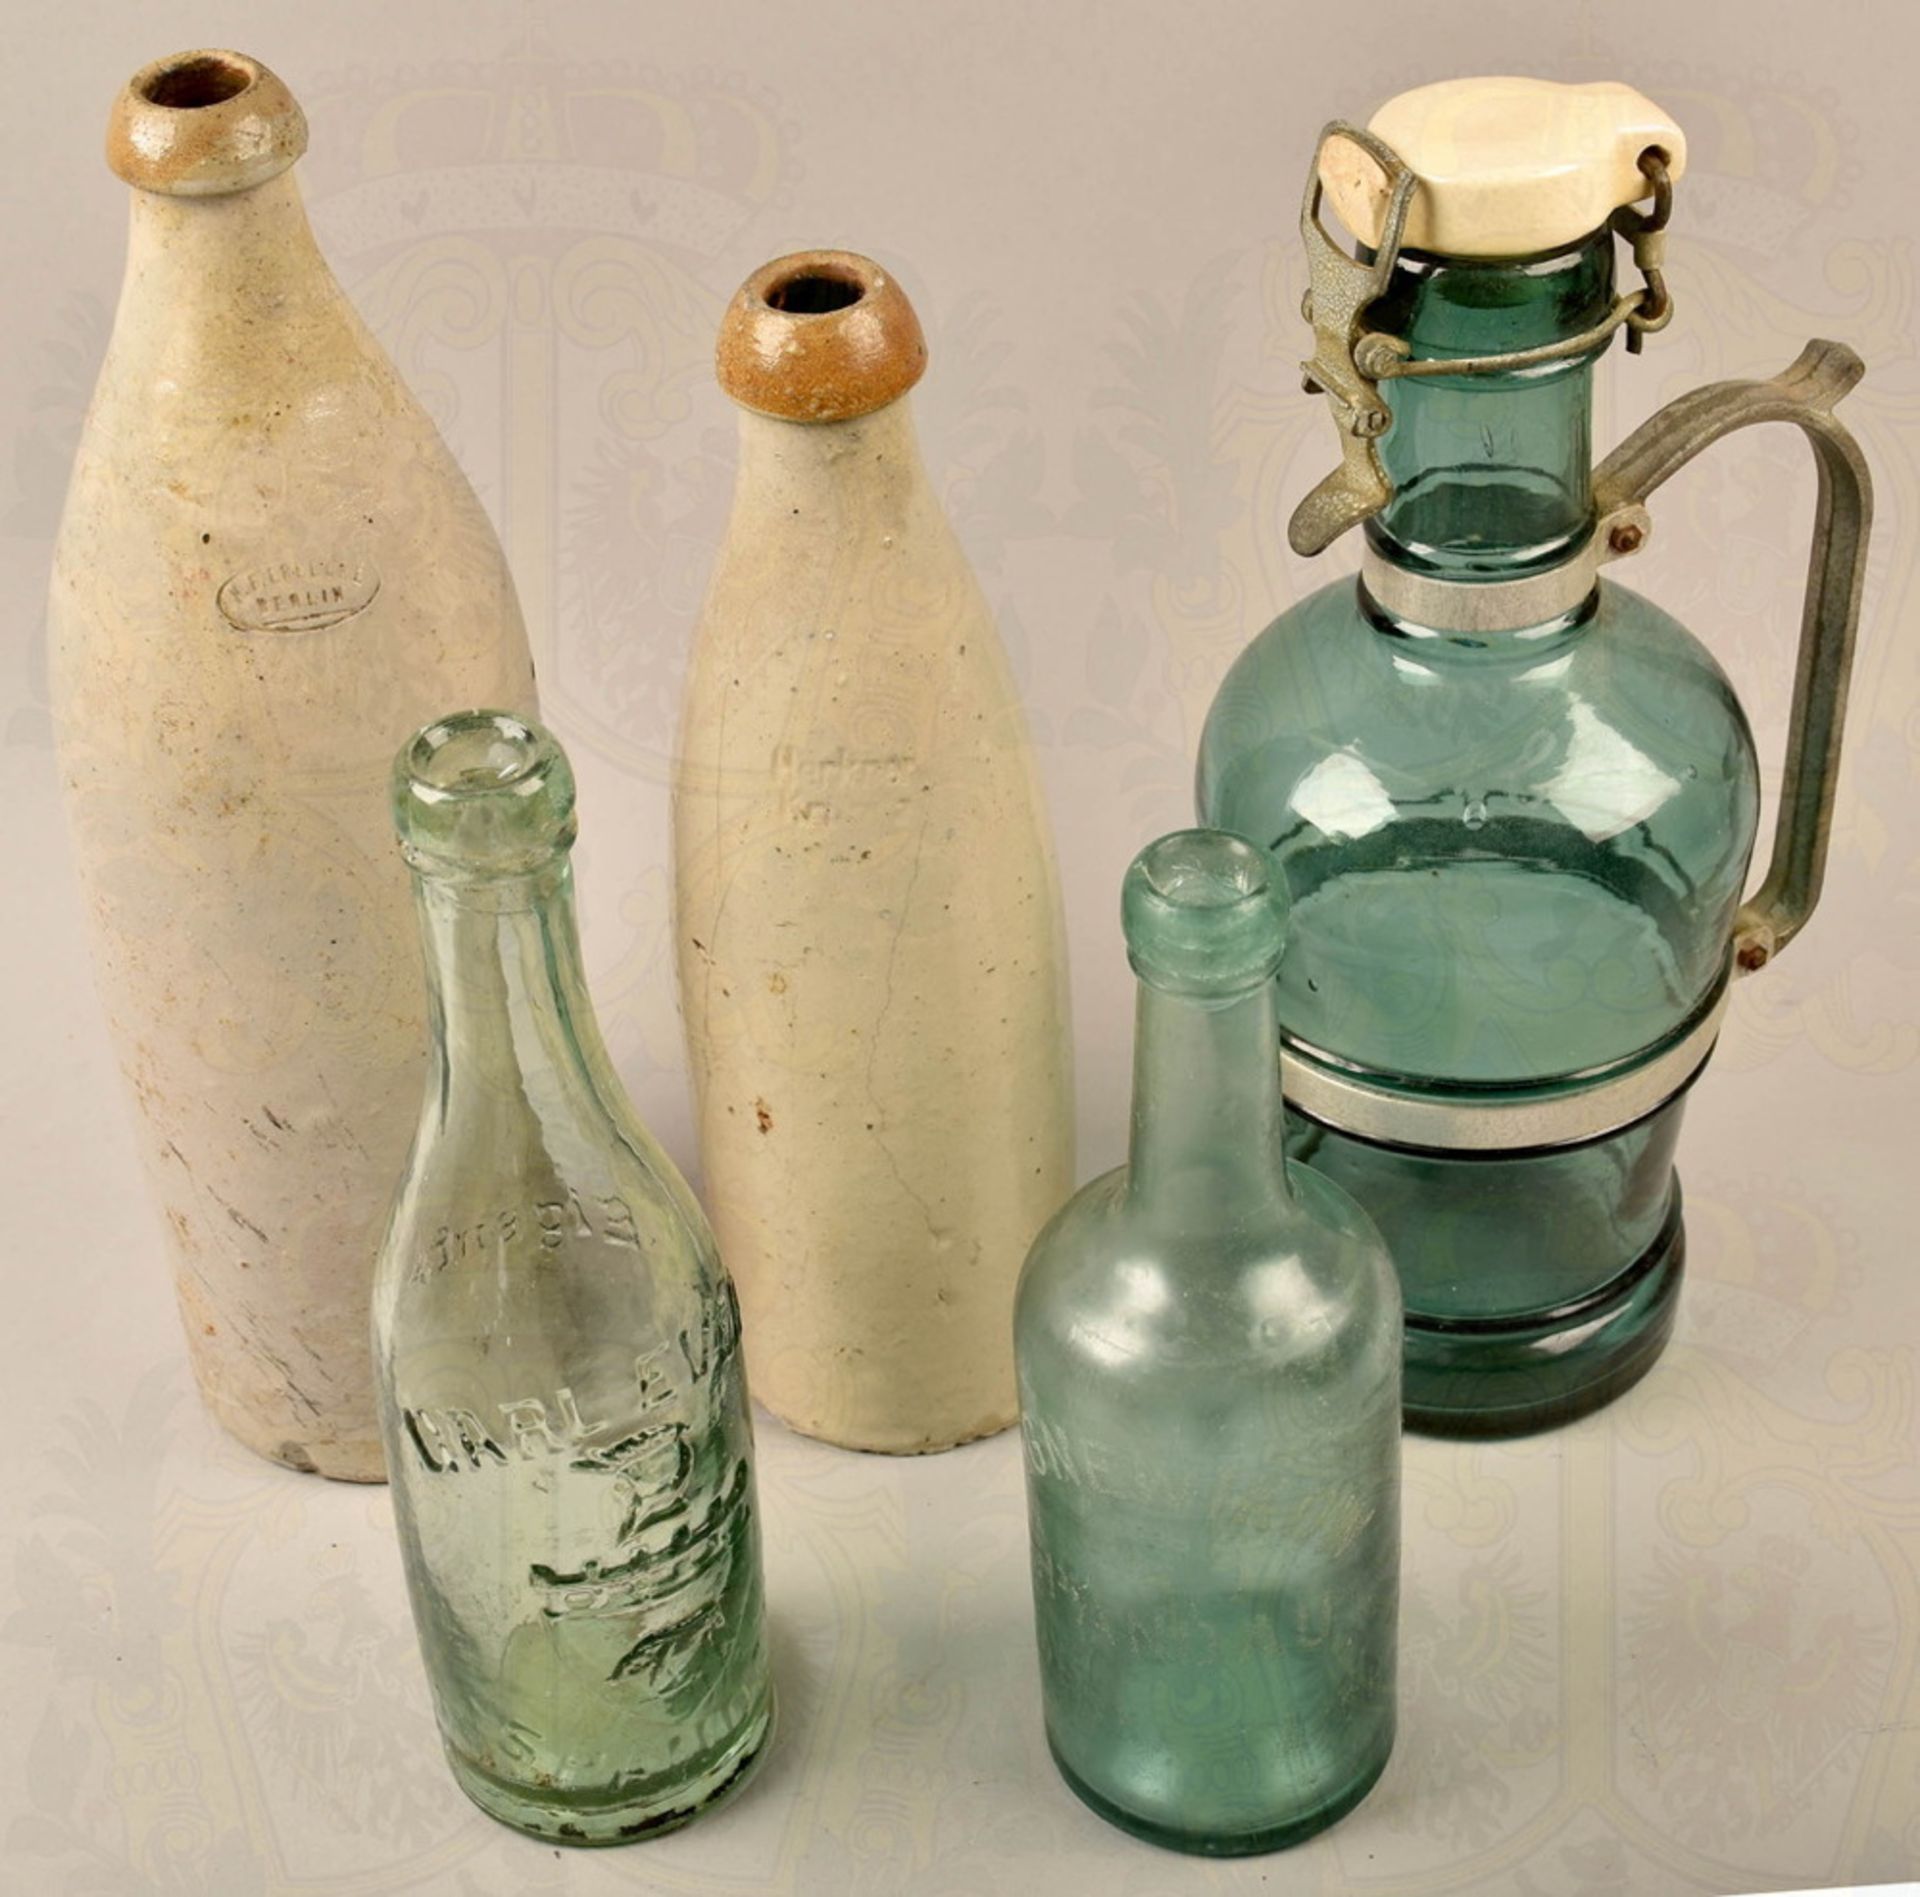 Collection of 2 glass bottles/2 ceramic bottles/1 carafe